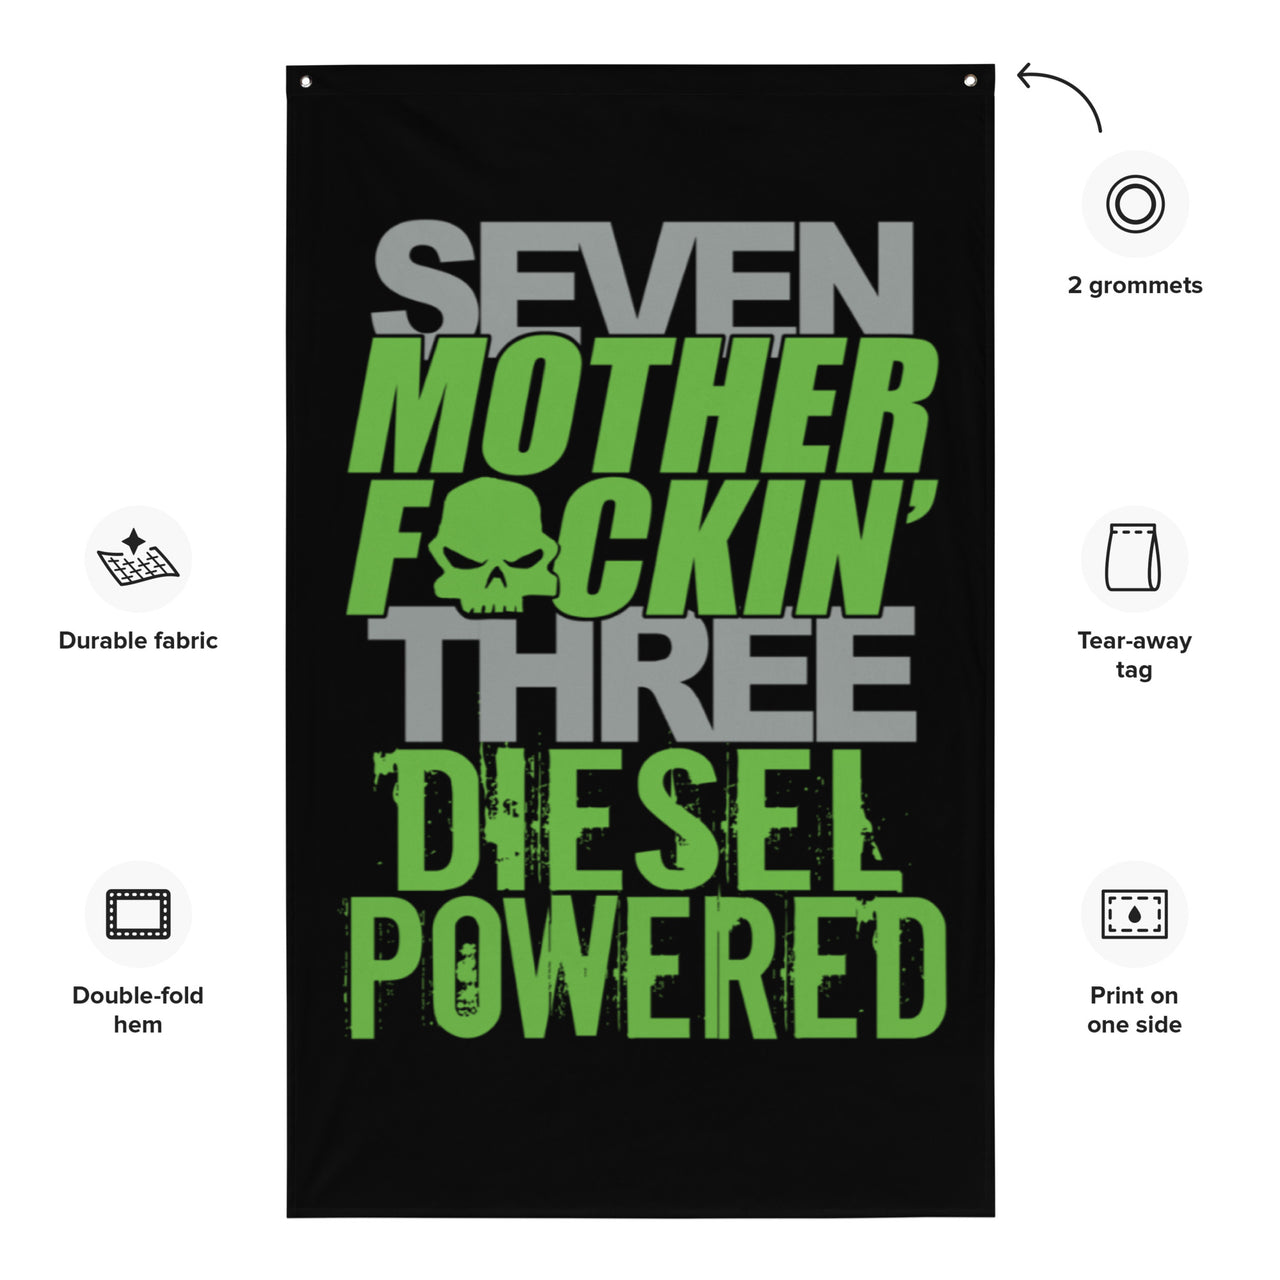 7.3 Power Stroke Diesel Flag details